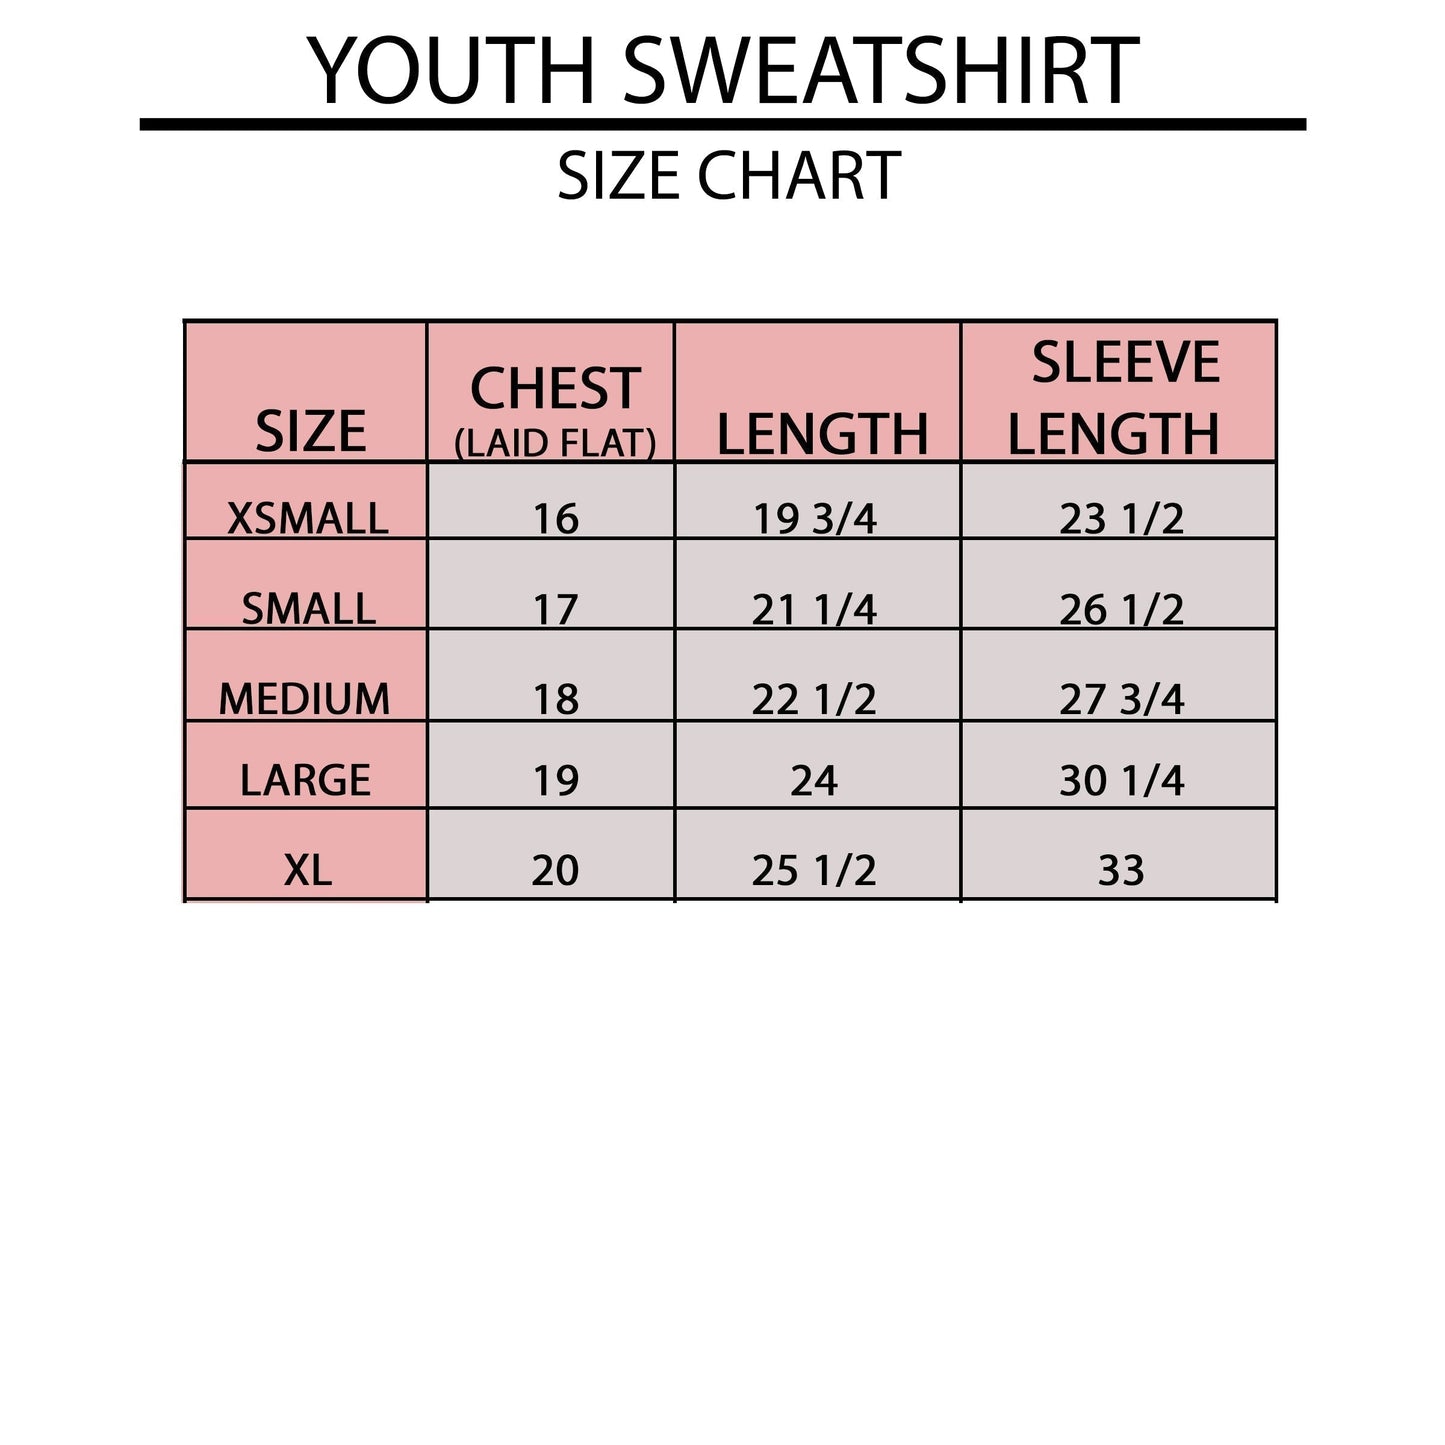 Big Bro Club | Youth Sweatshirt